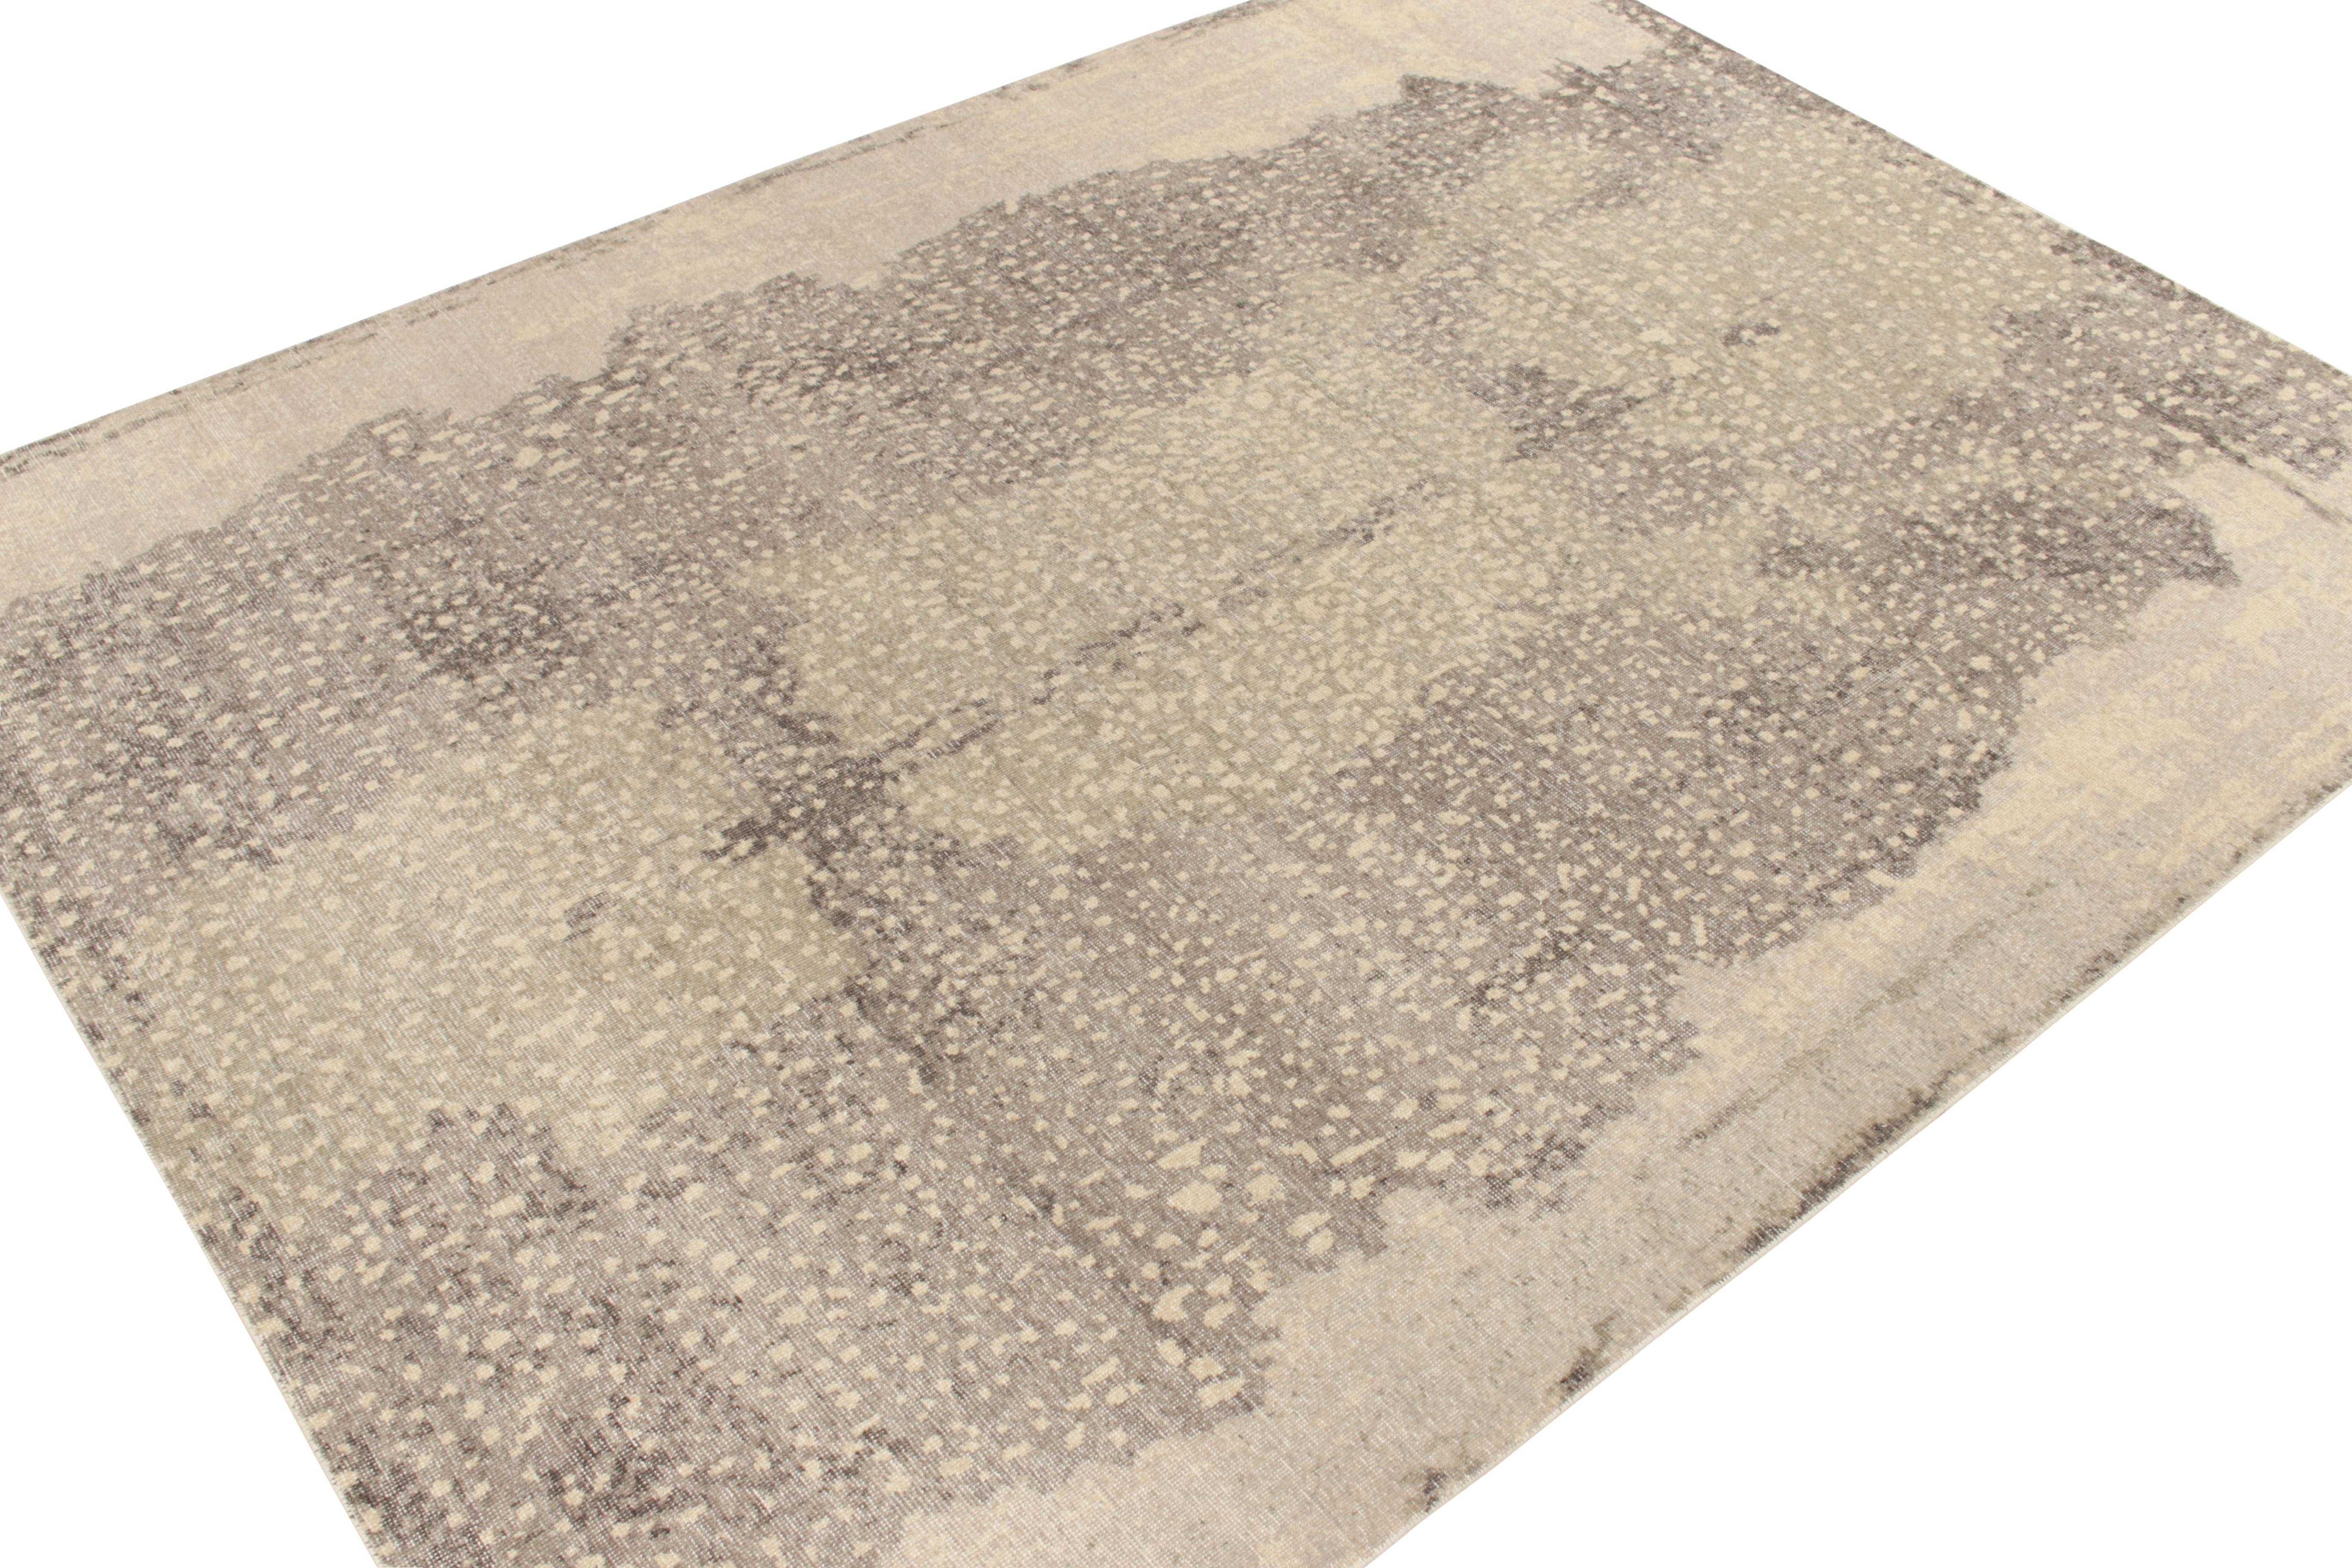 Rug & Kilim's Moderner Teppich im Distressed-Stil in Beige, Grau Abstraktes Muster (Moderne der Mitte des Jahrhunderts) im Angebot